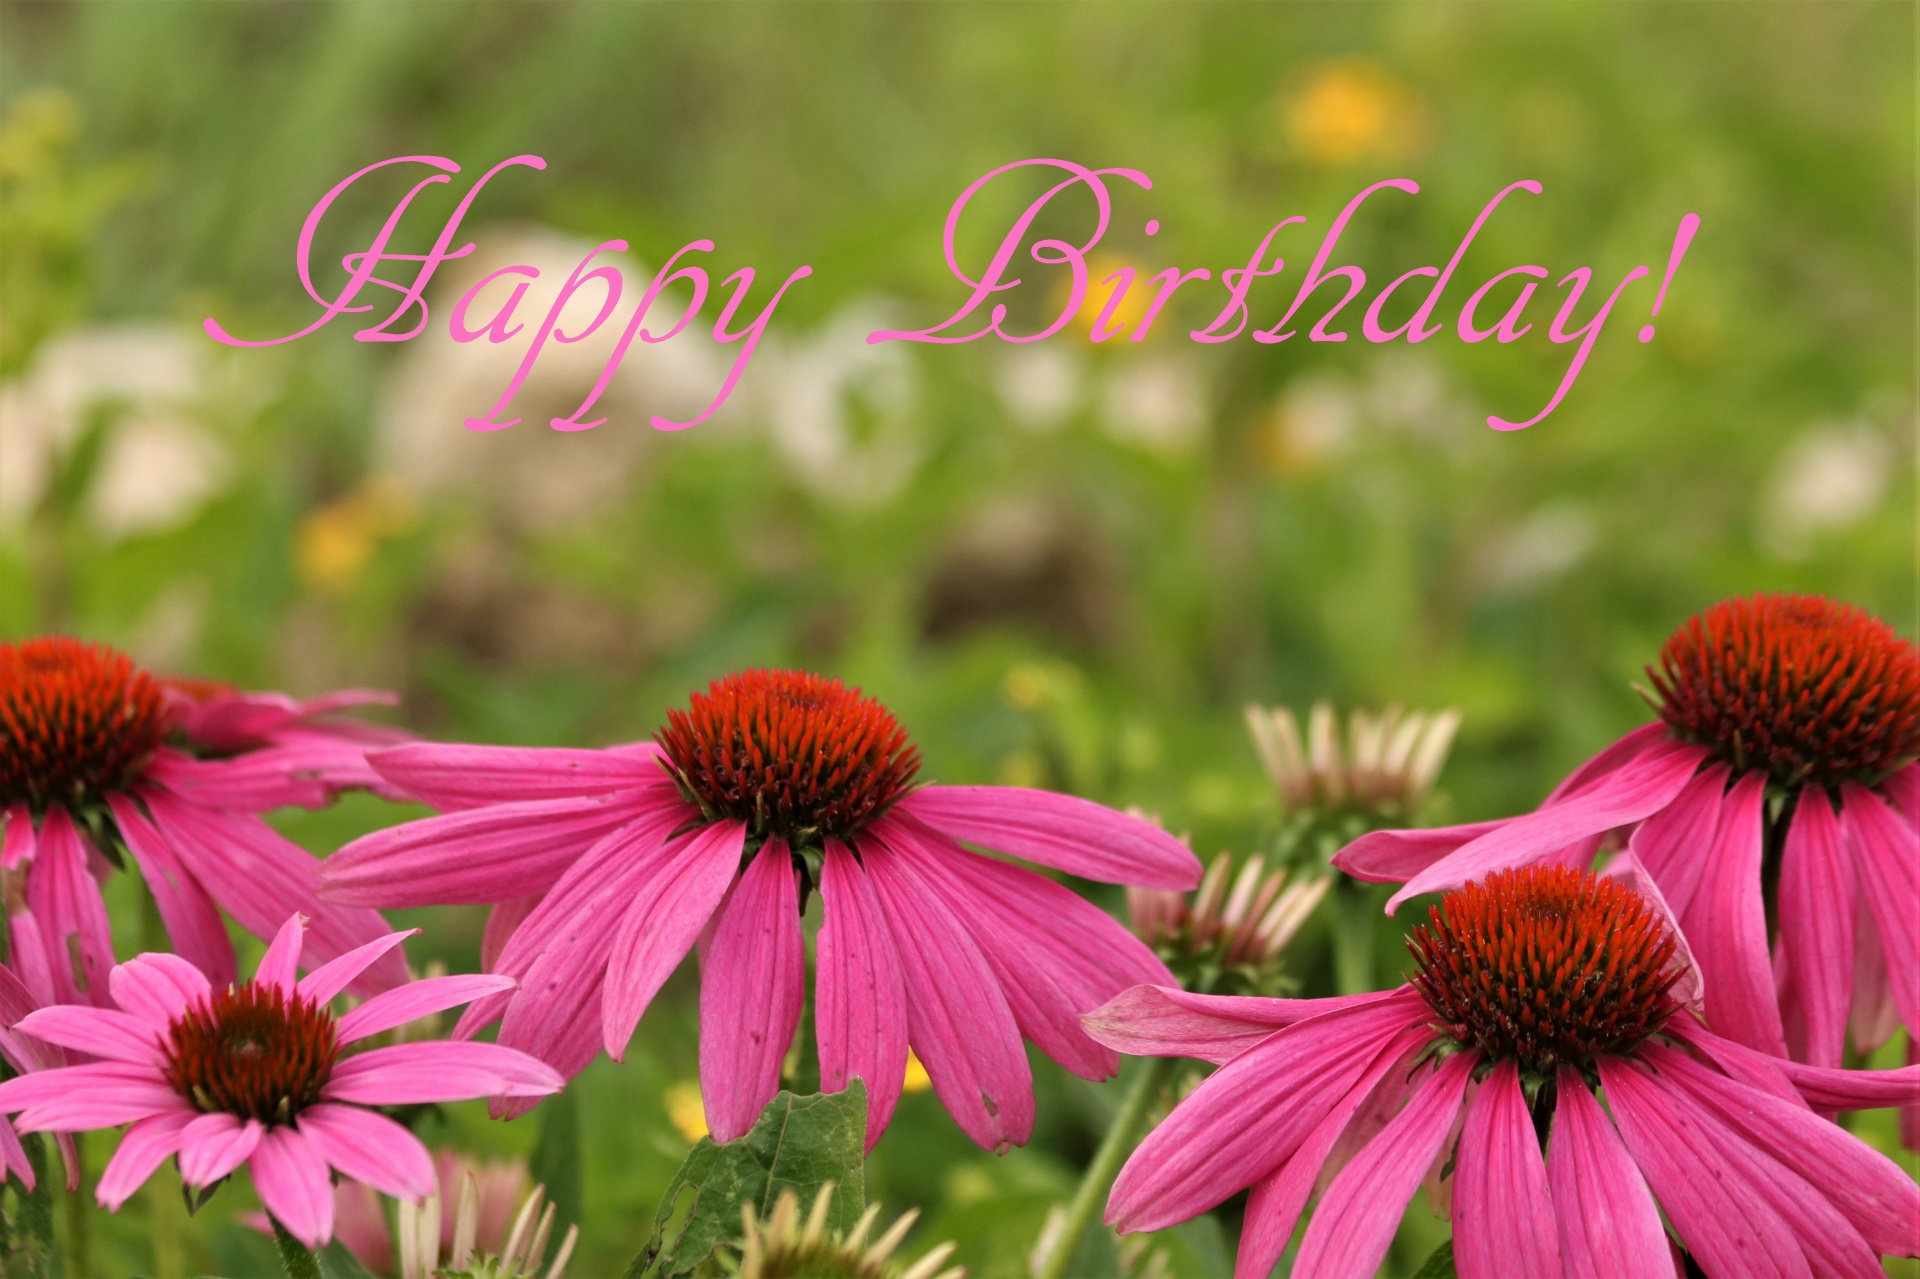 Happy Birthday Pink Coneflowers